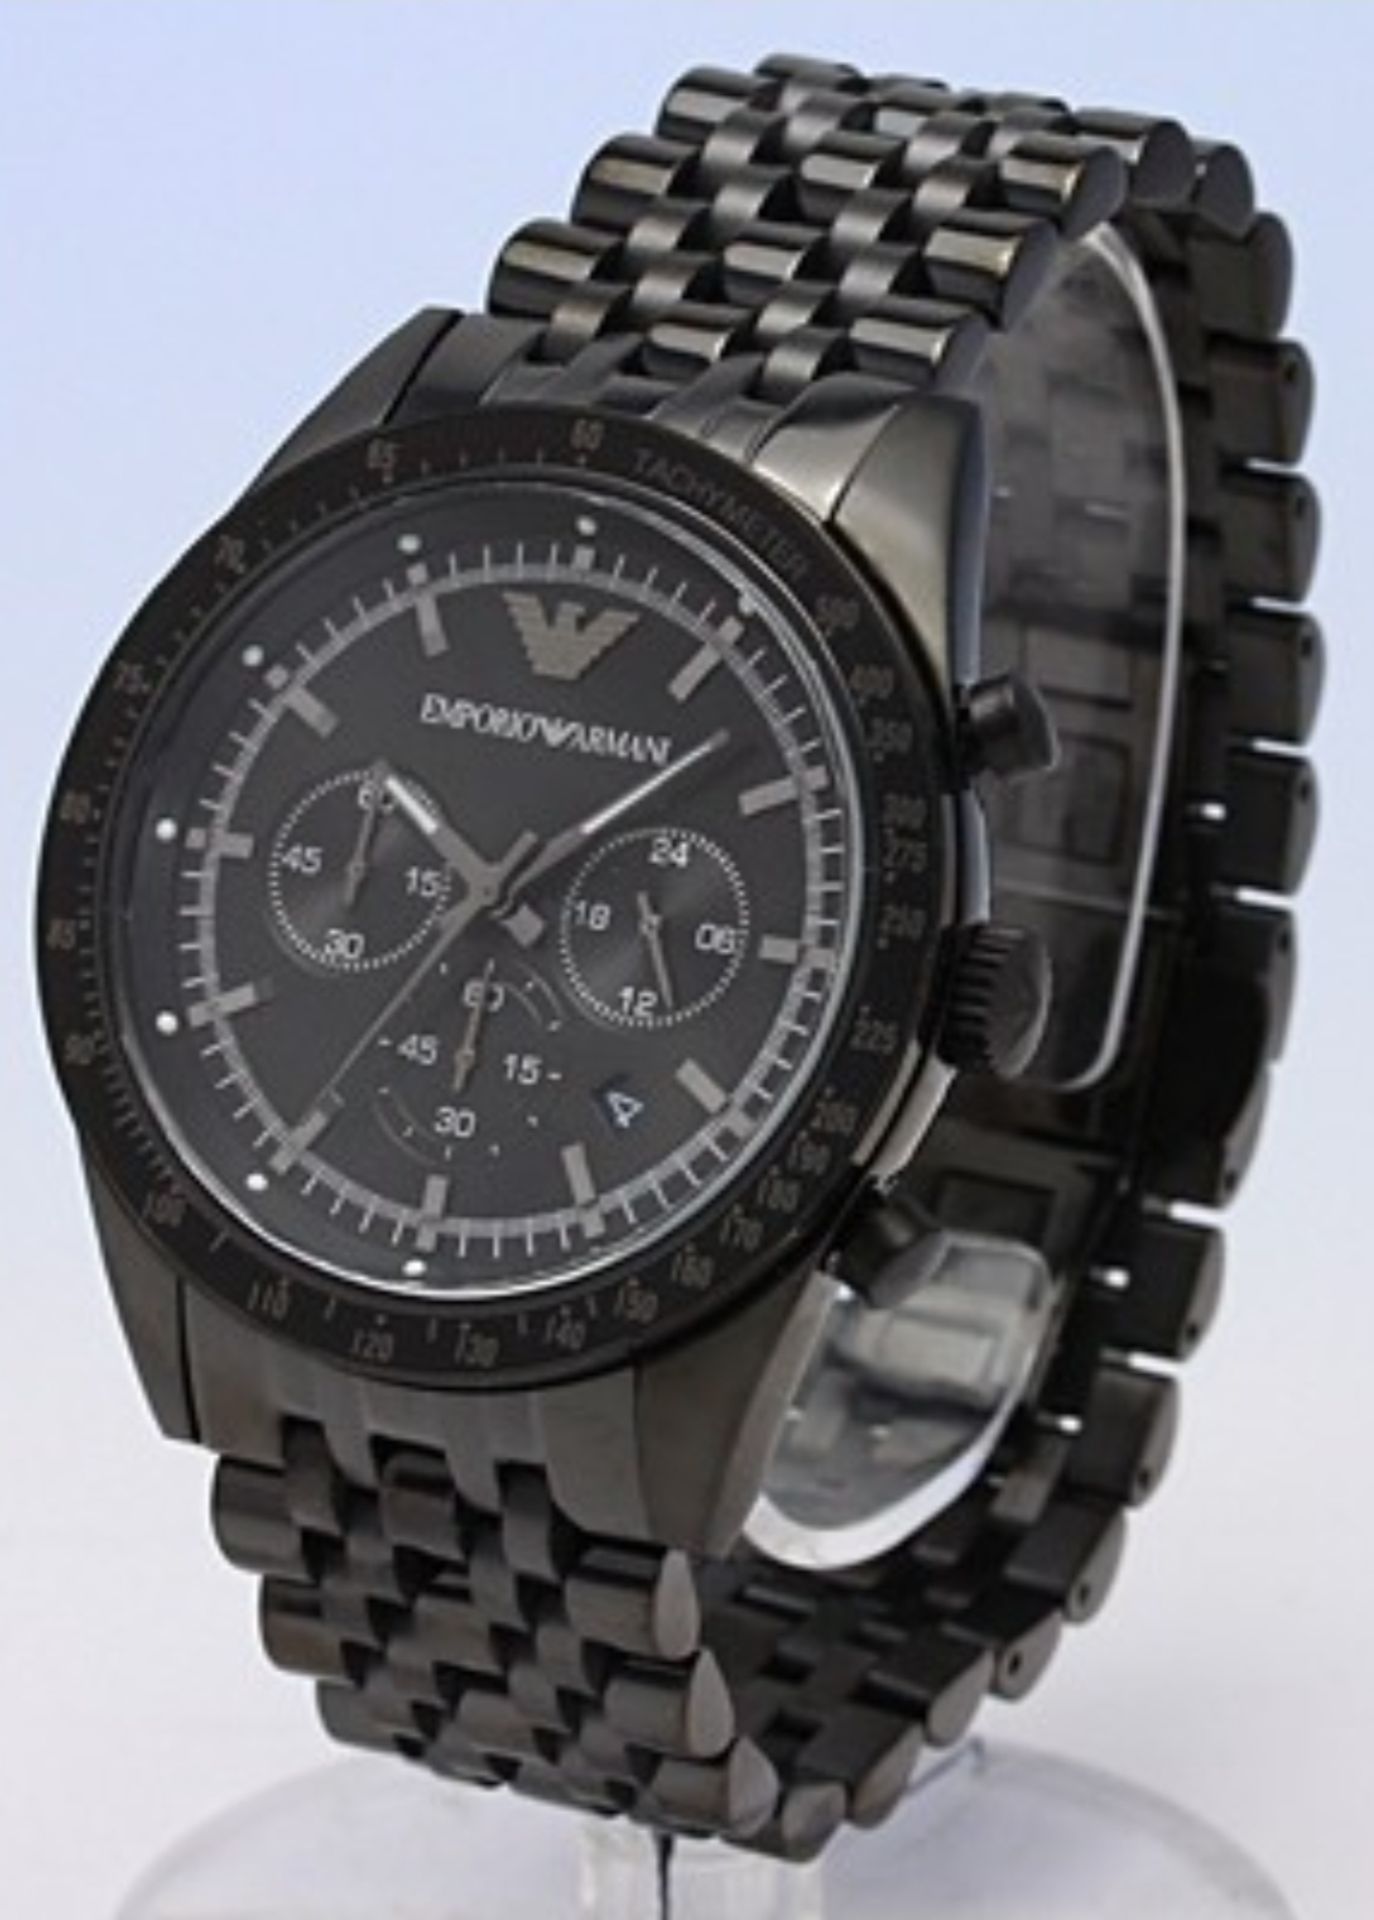 Emporio Armani AR5989 Men's Tazio Black Stainless Steel Bracelet Chronograph Watch - Image 6 of 9